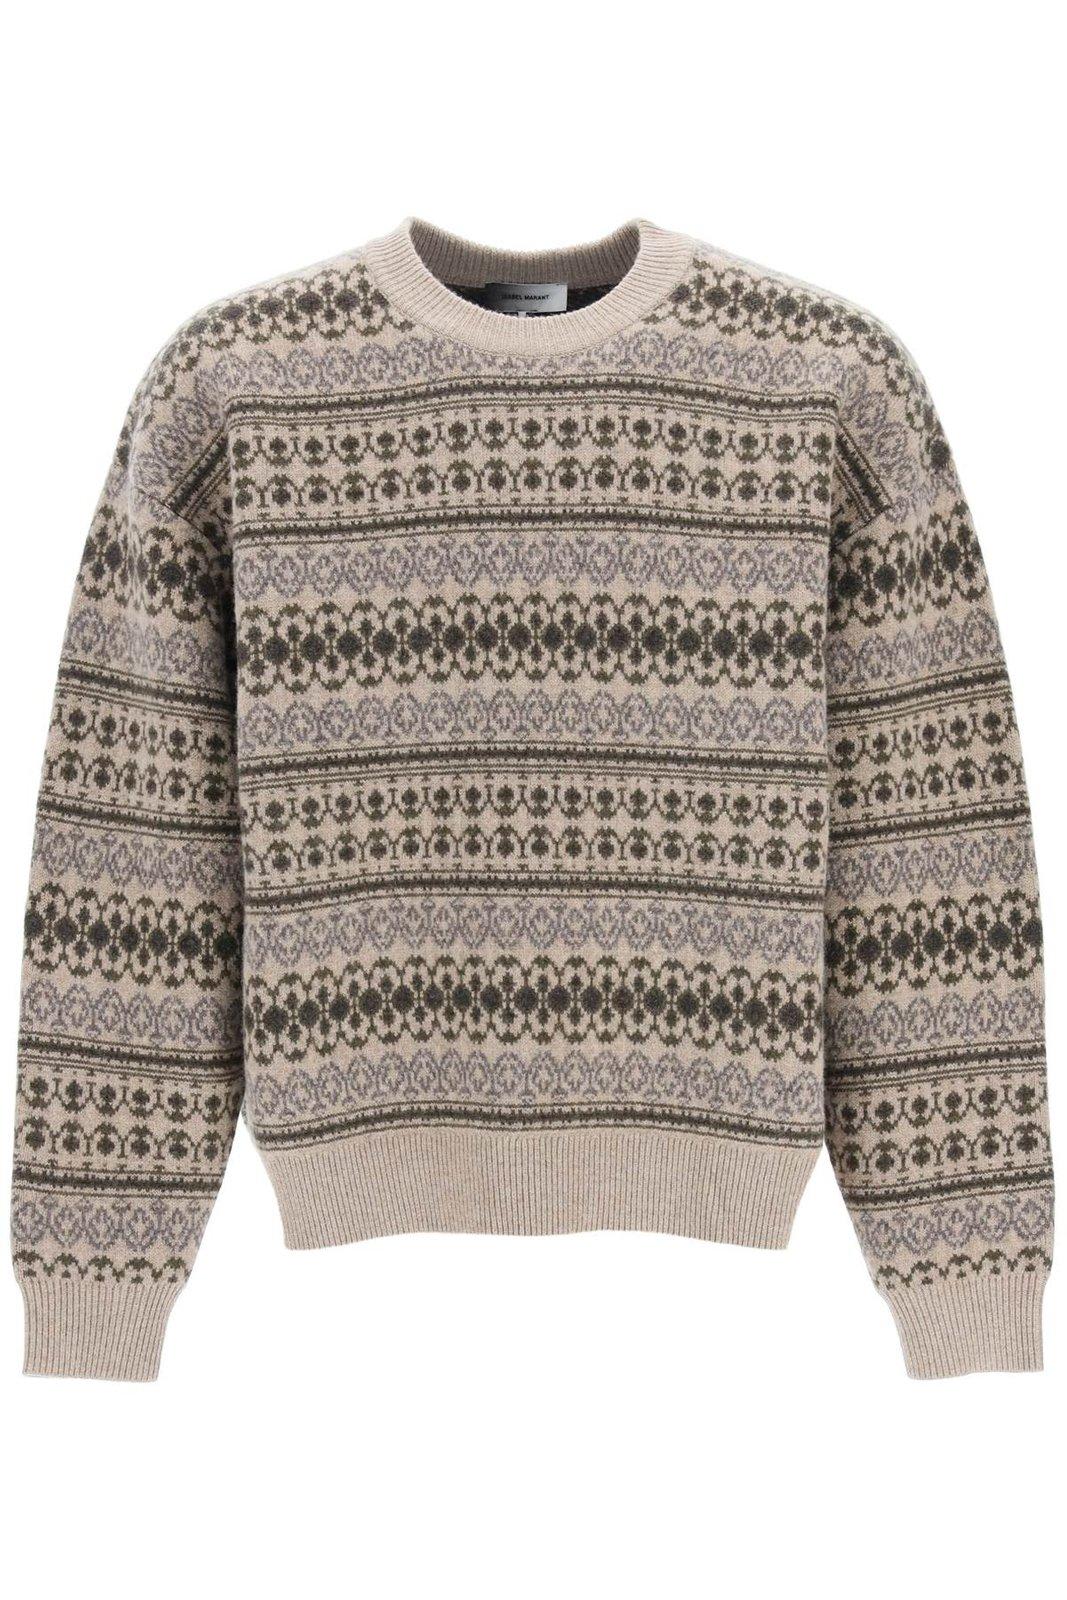 Isabel Marant Leysterh Jacquard Pattern Sweater